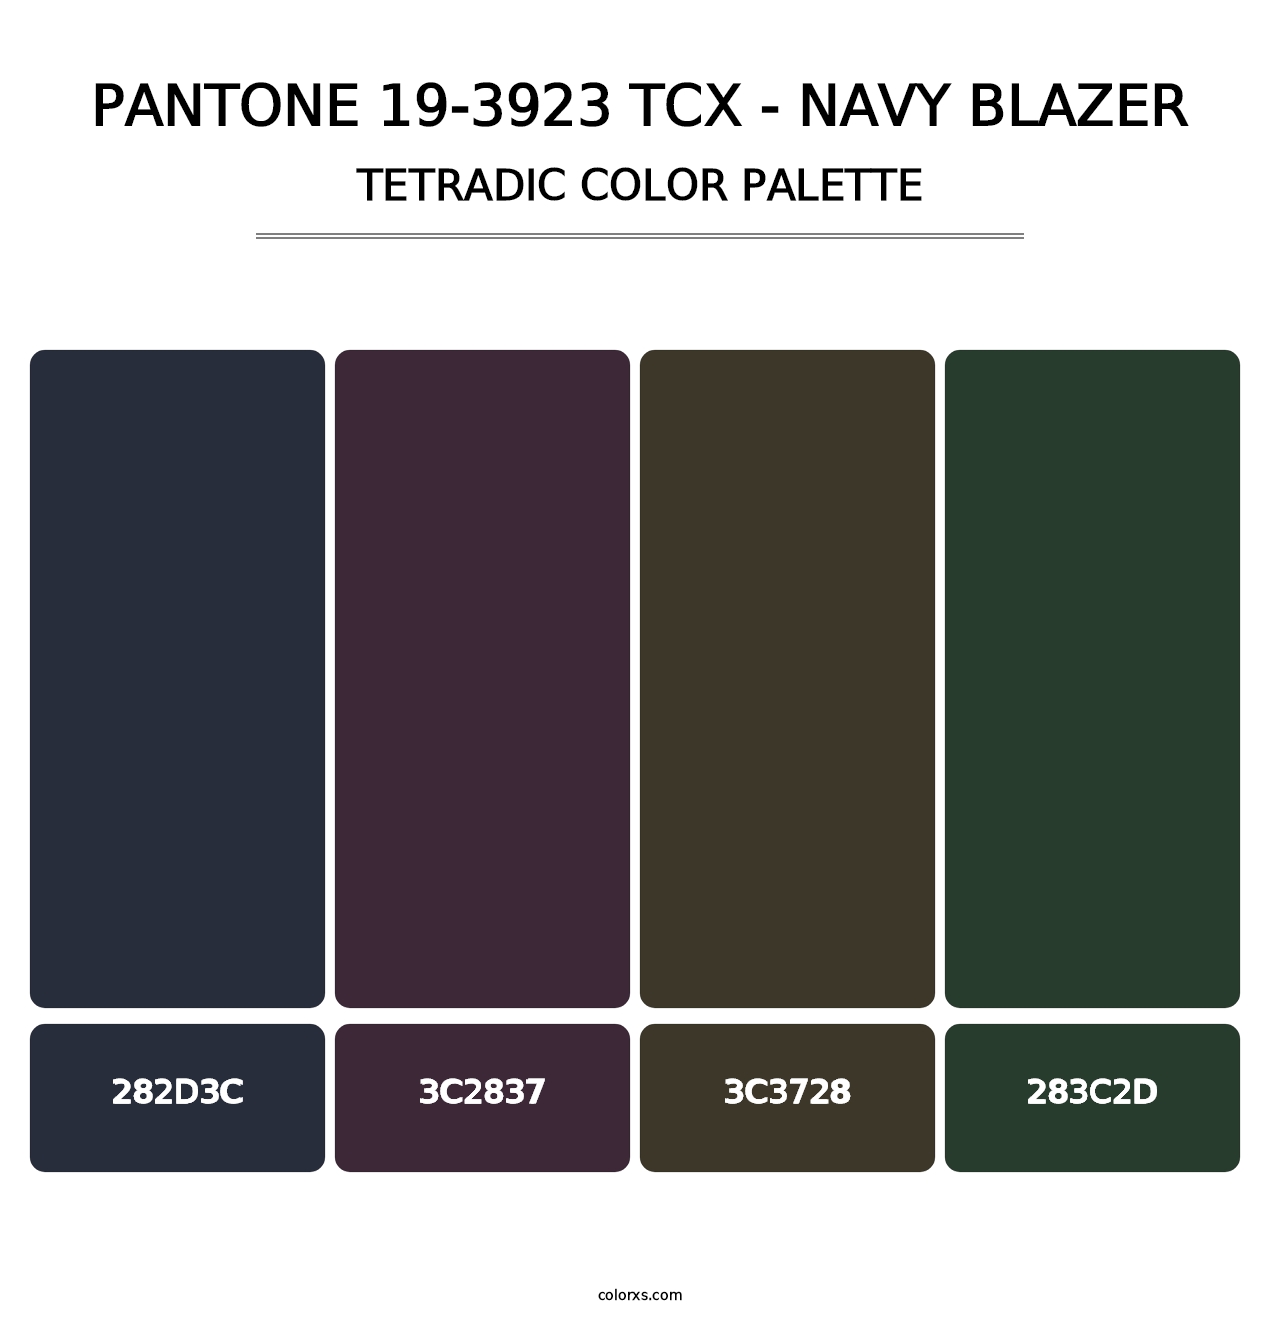 PANTONE 19-3923 TCX - Navy Blazer - Tetradic Color Palette